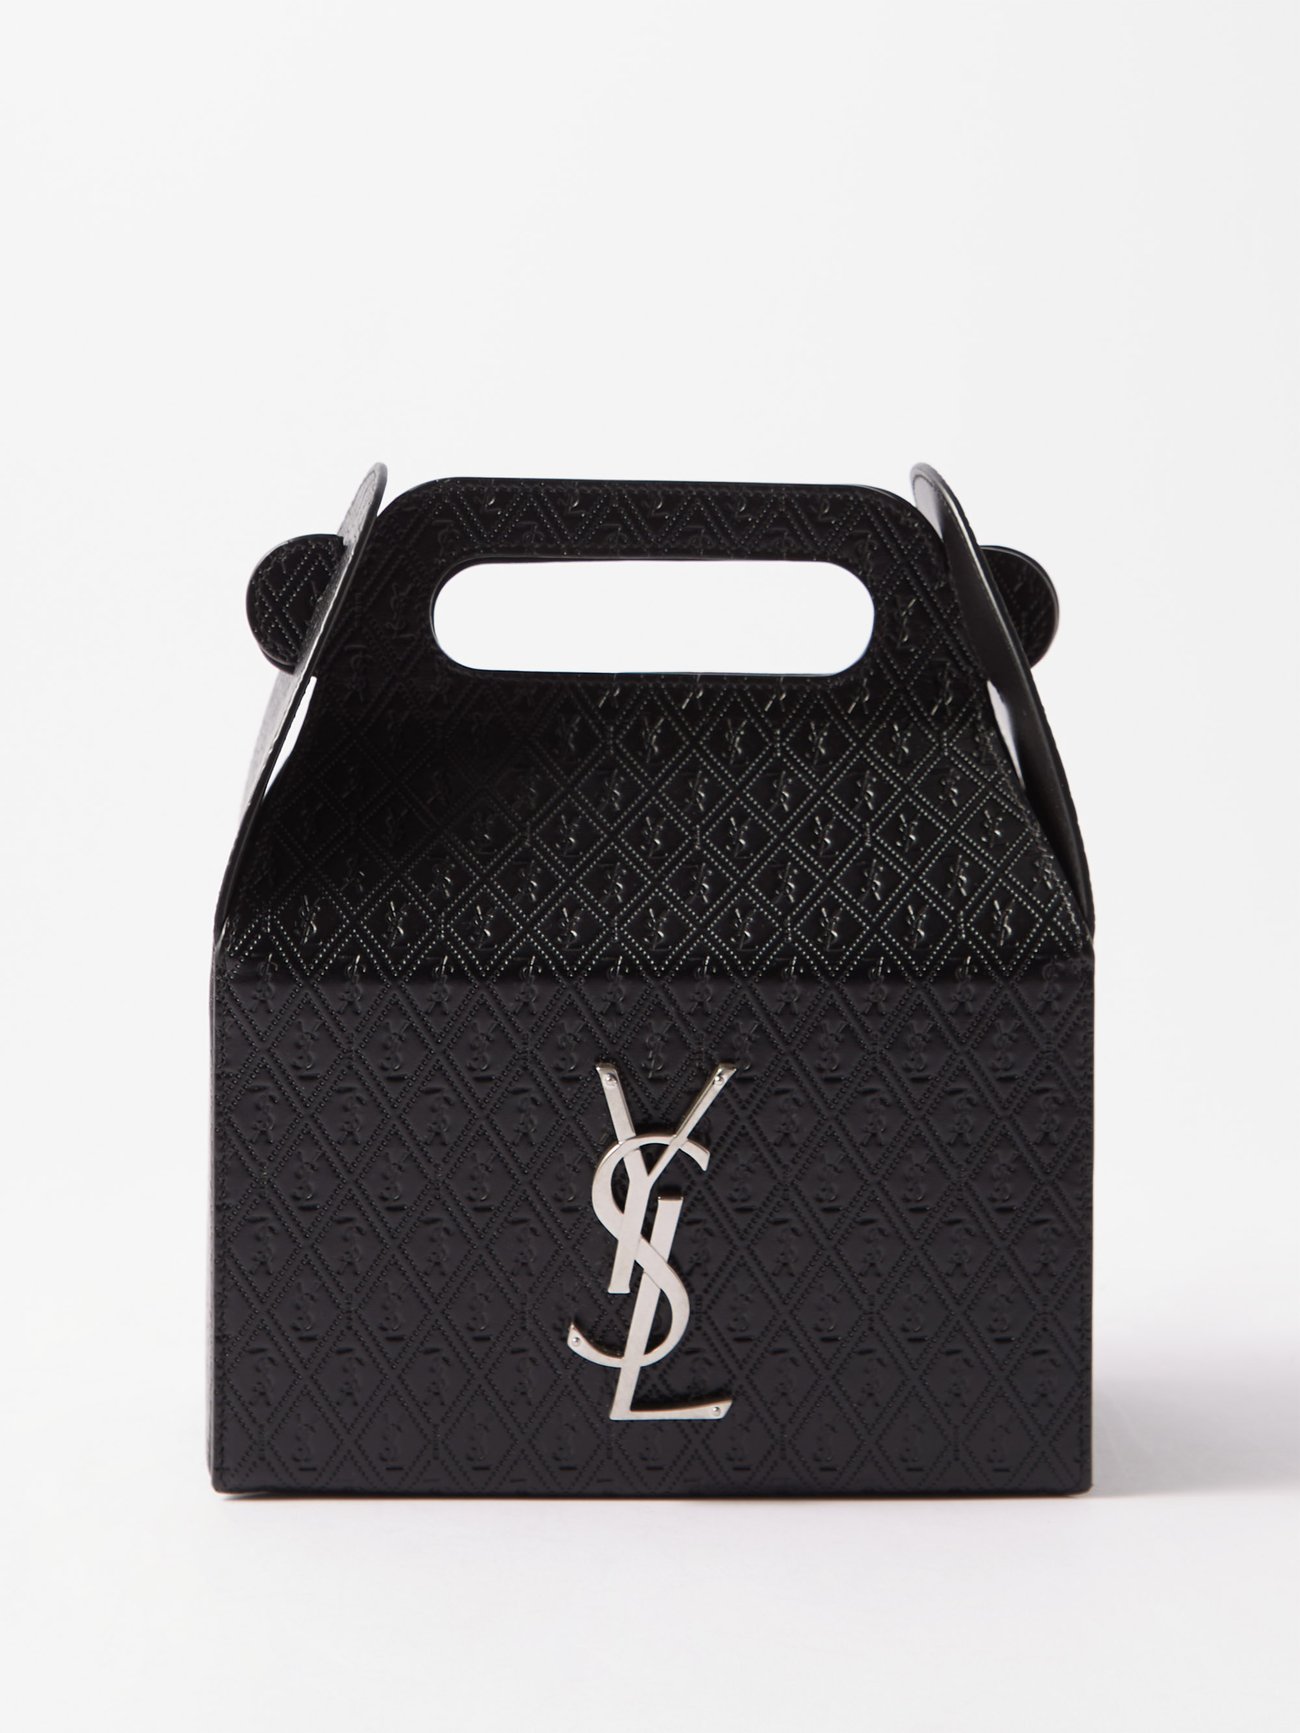 Black Logo-debossed leather cube bag, Saint Laurent